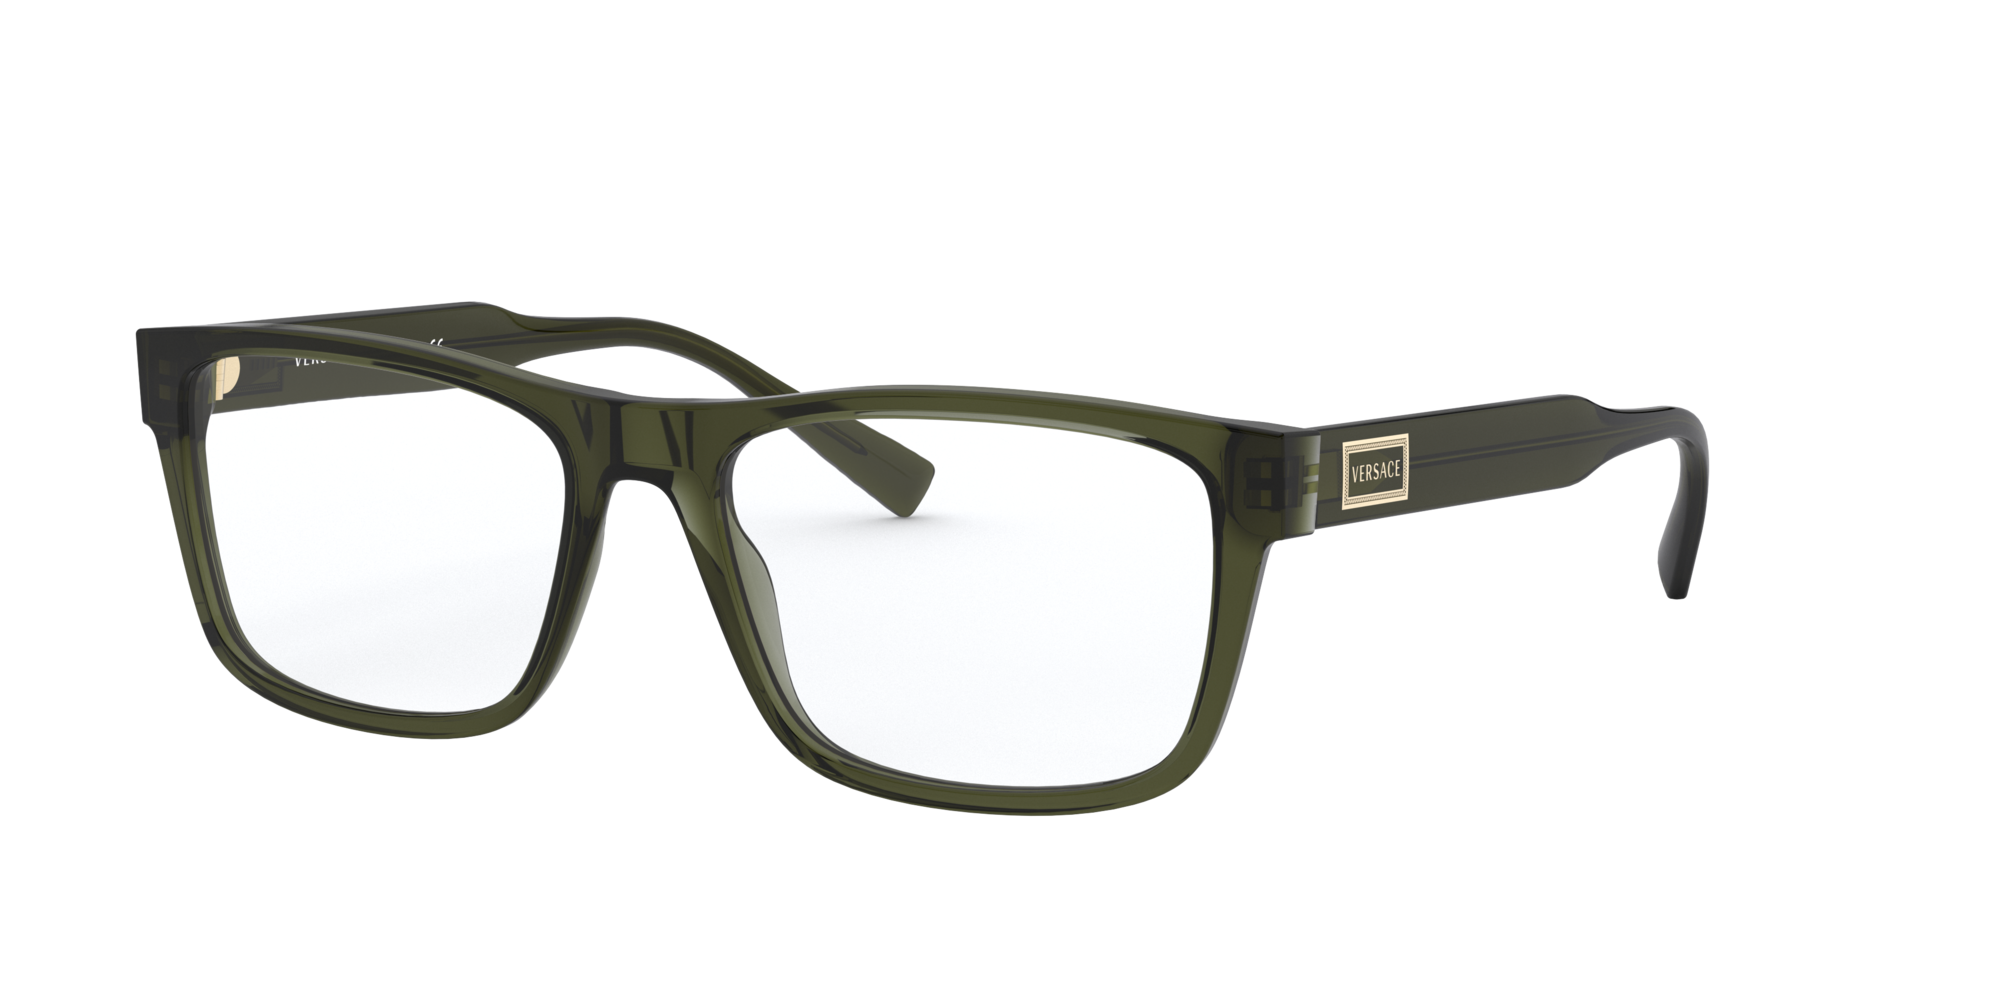 versace mens glasses lenscrafters